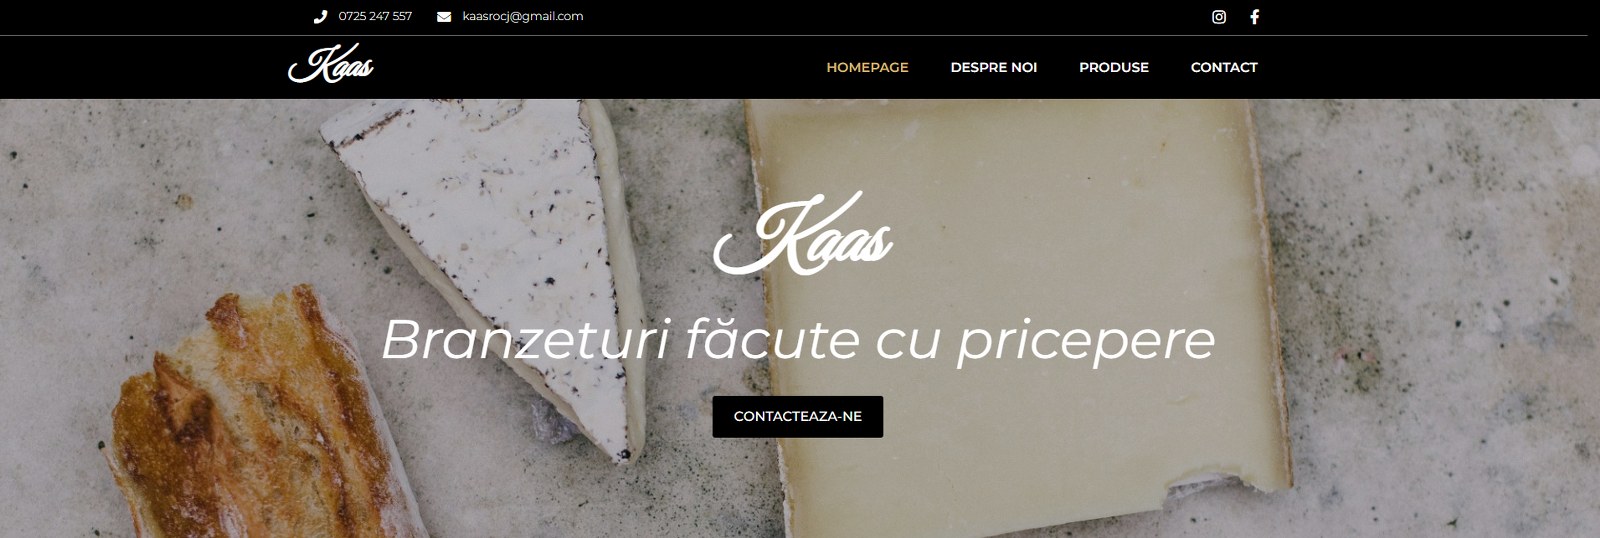 Prima pagina din site-ul kaas.ro